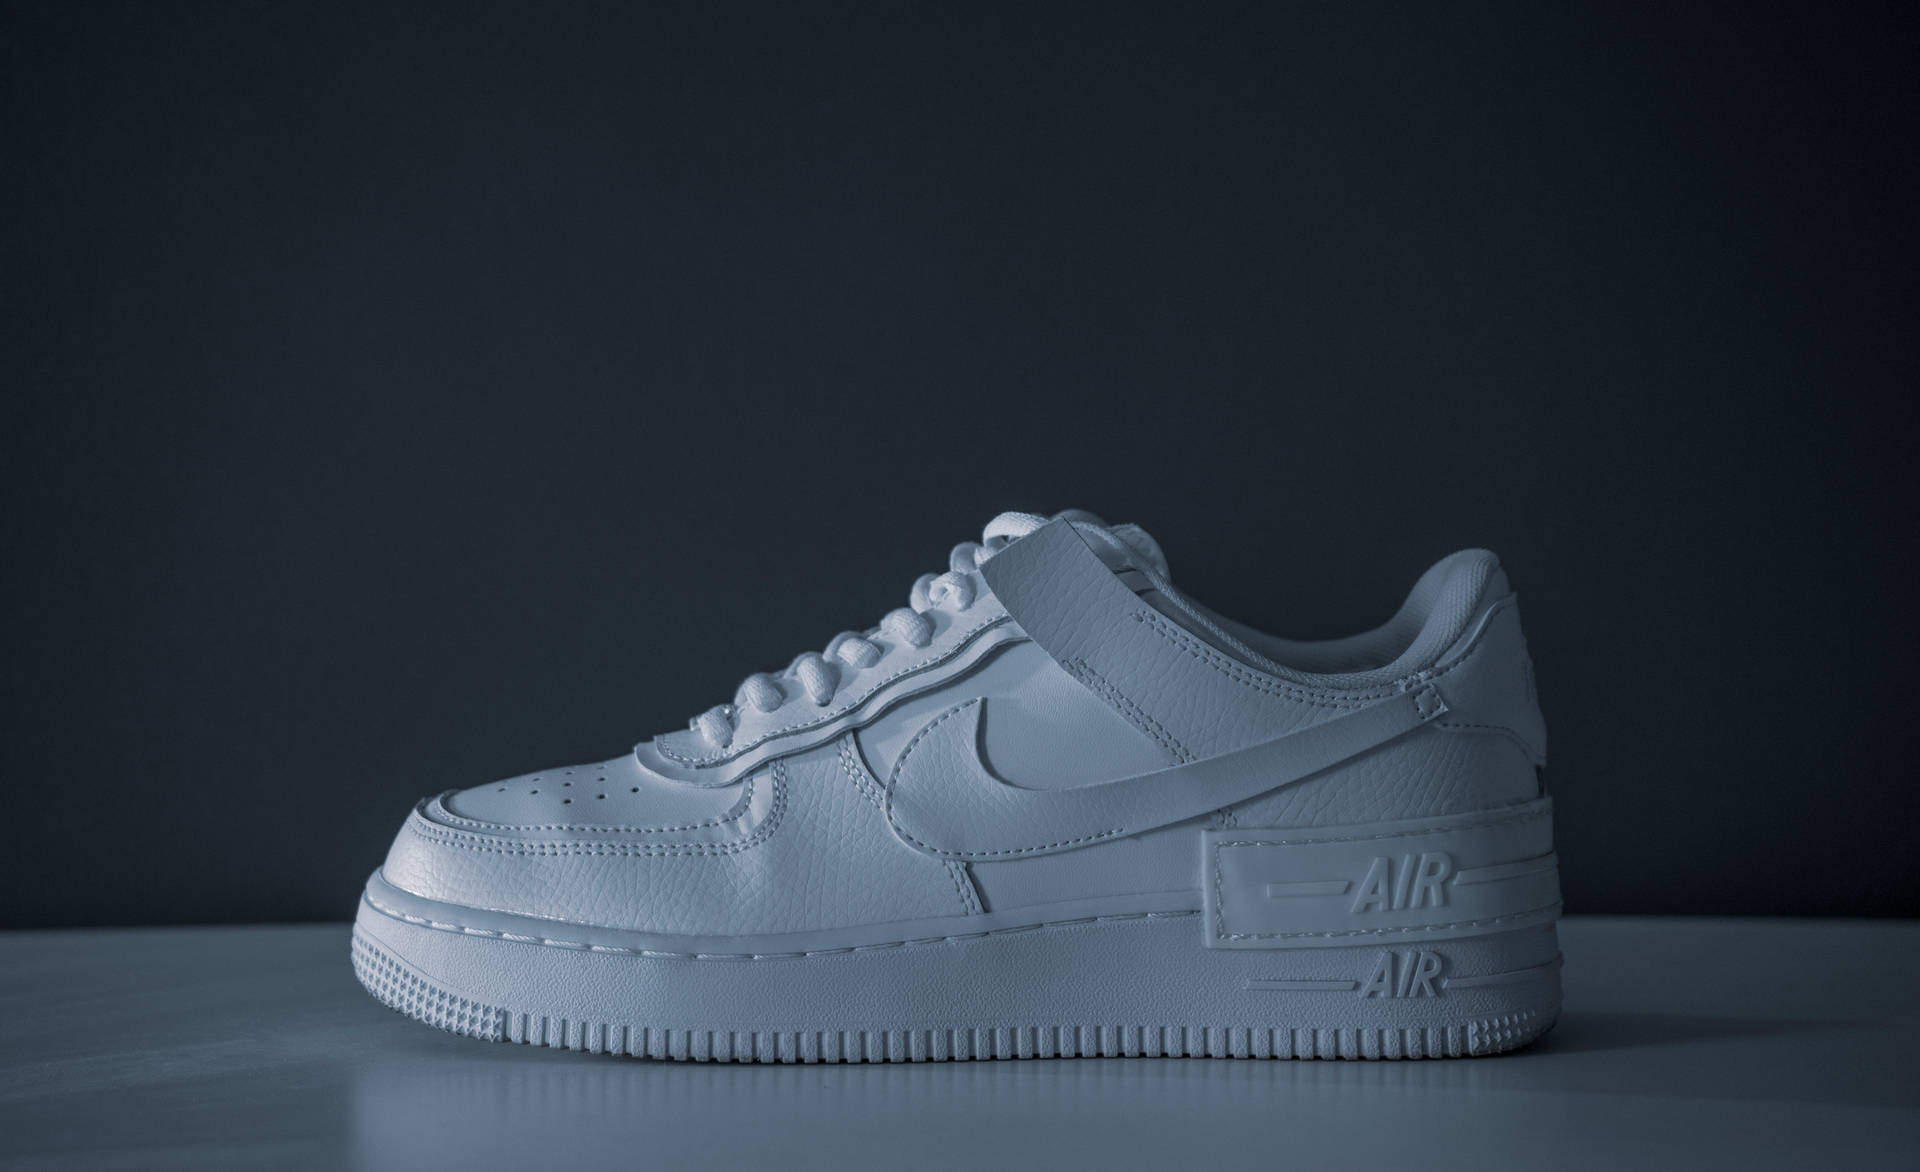 4k White Nike Air Shoe On Black